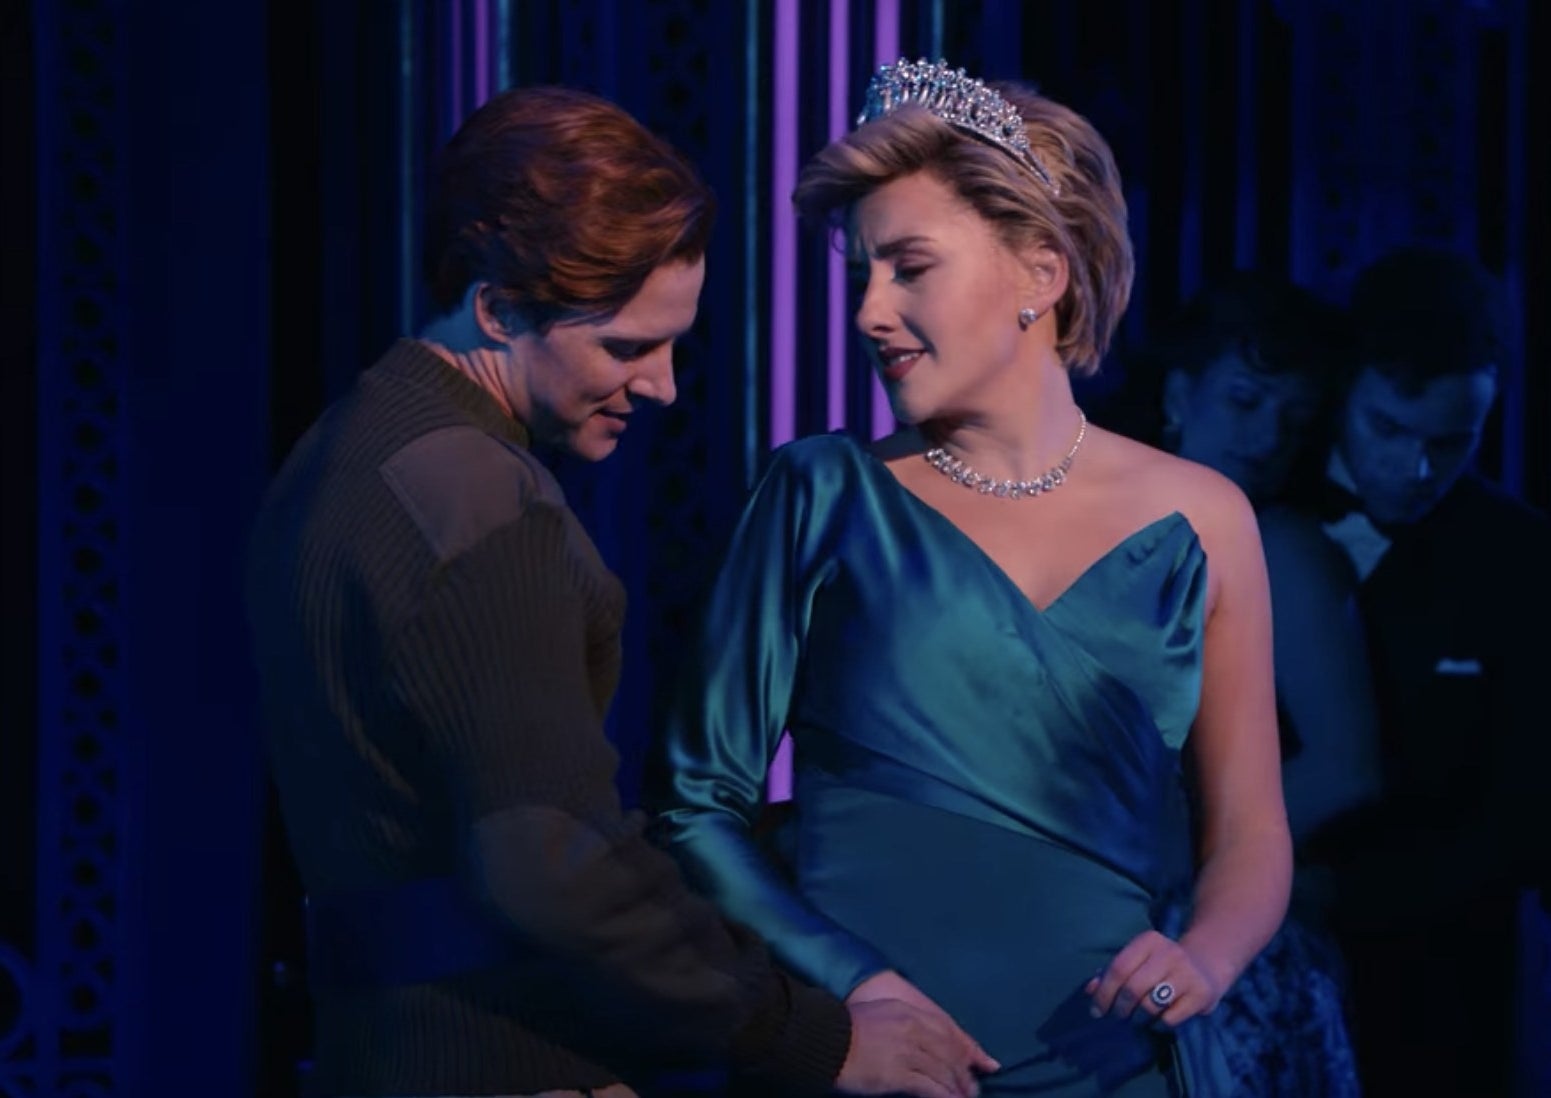 Gareth Keegan as James Hewitt dances with Jeanna de Waal as Princess Diana in a blue asymmetrical dress and tiara.